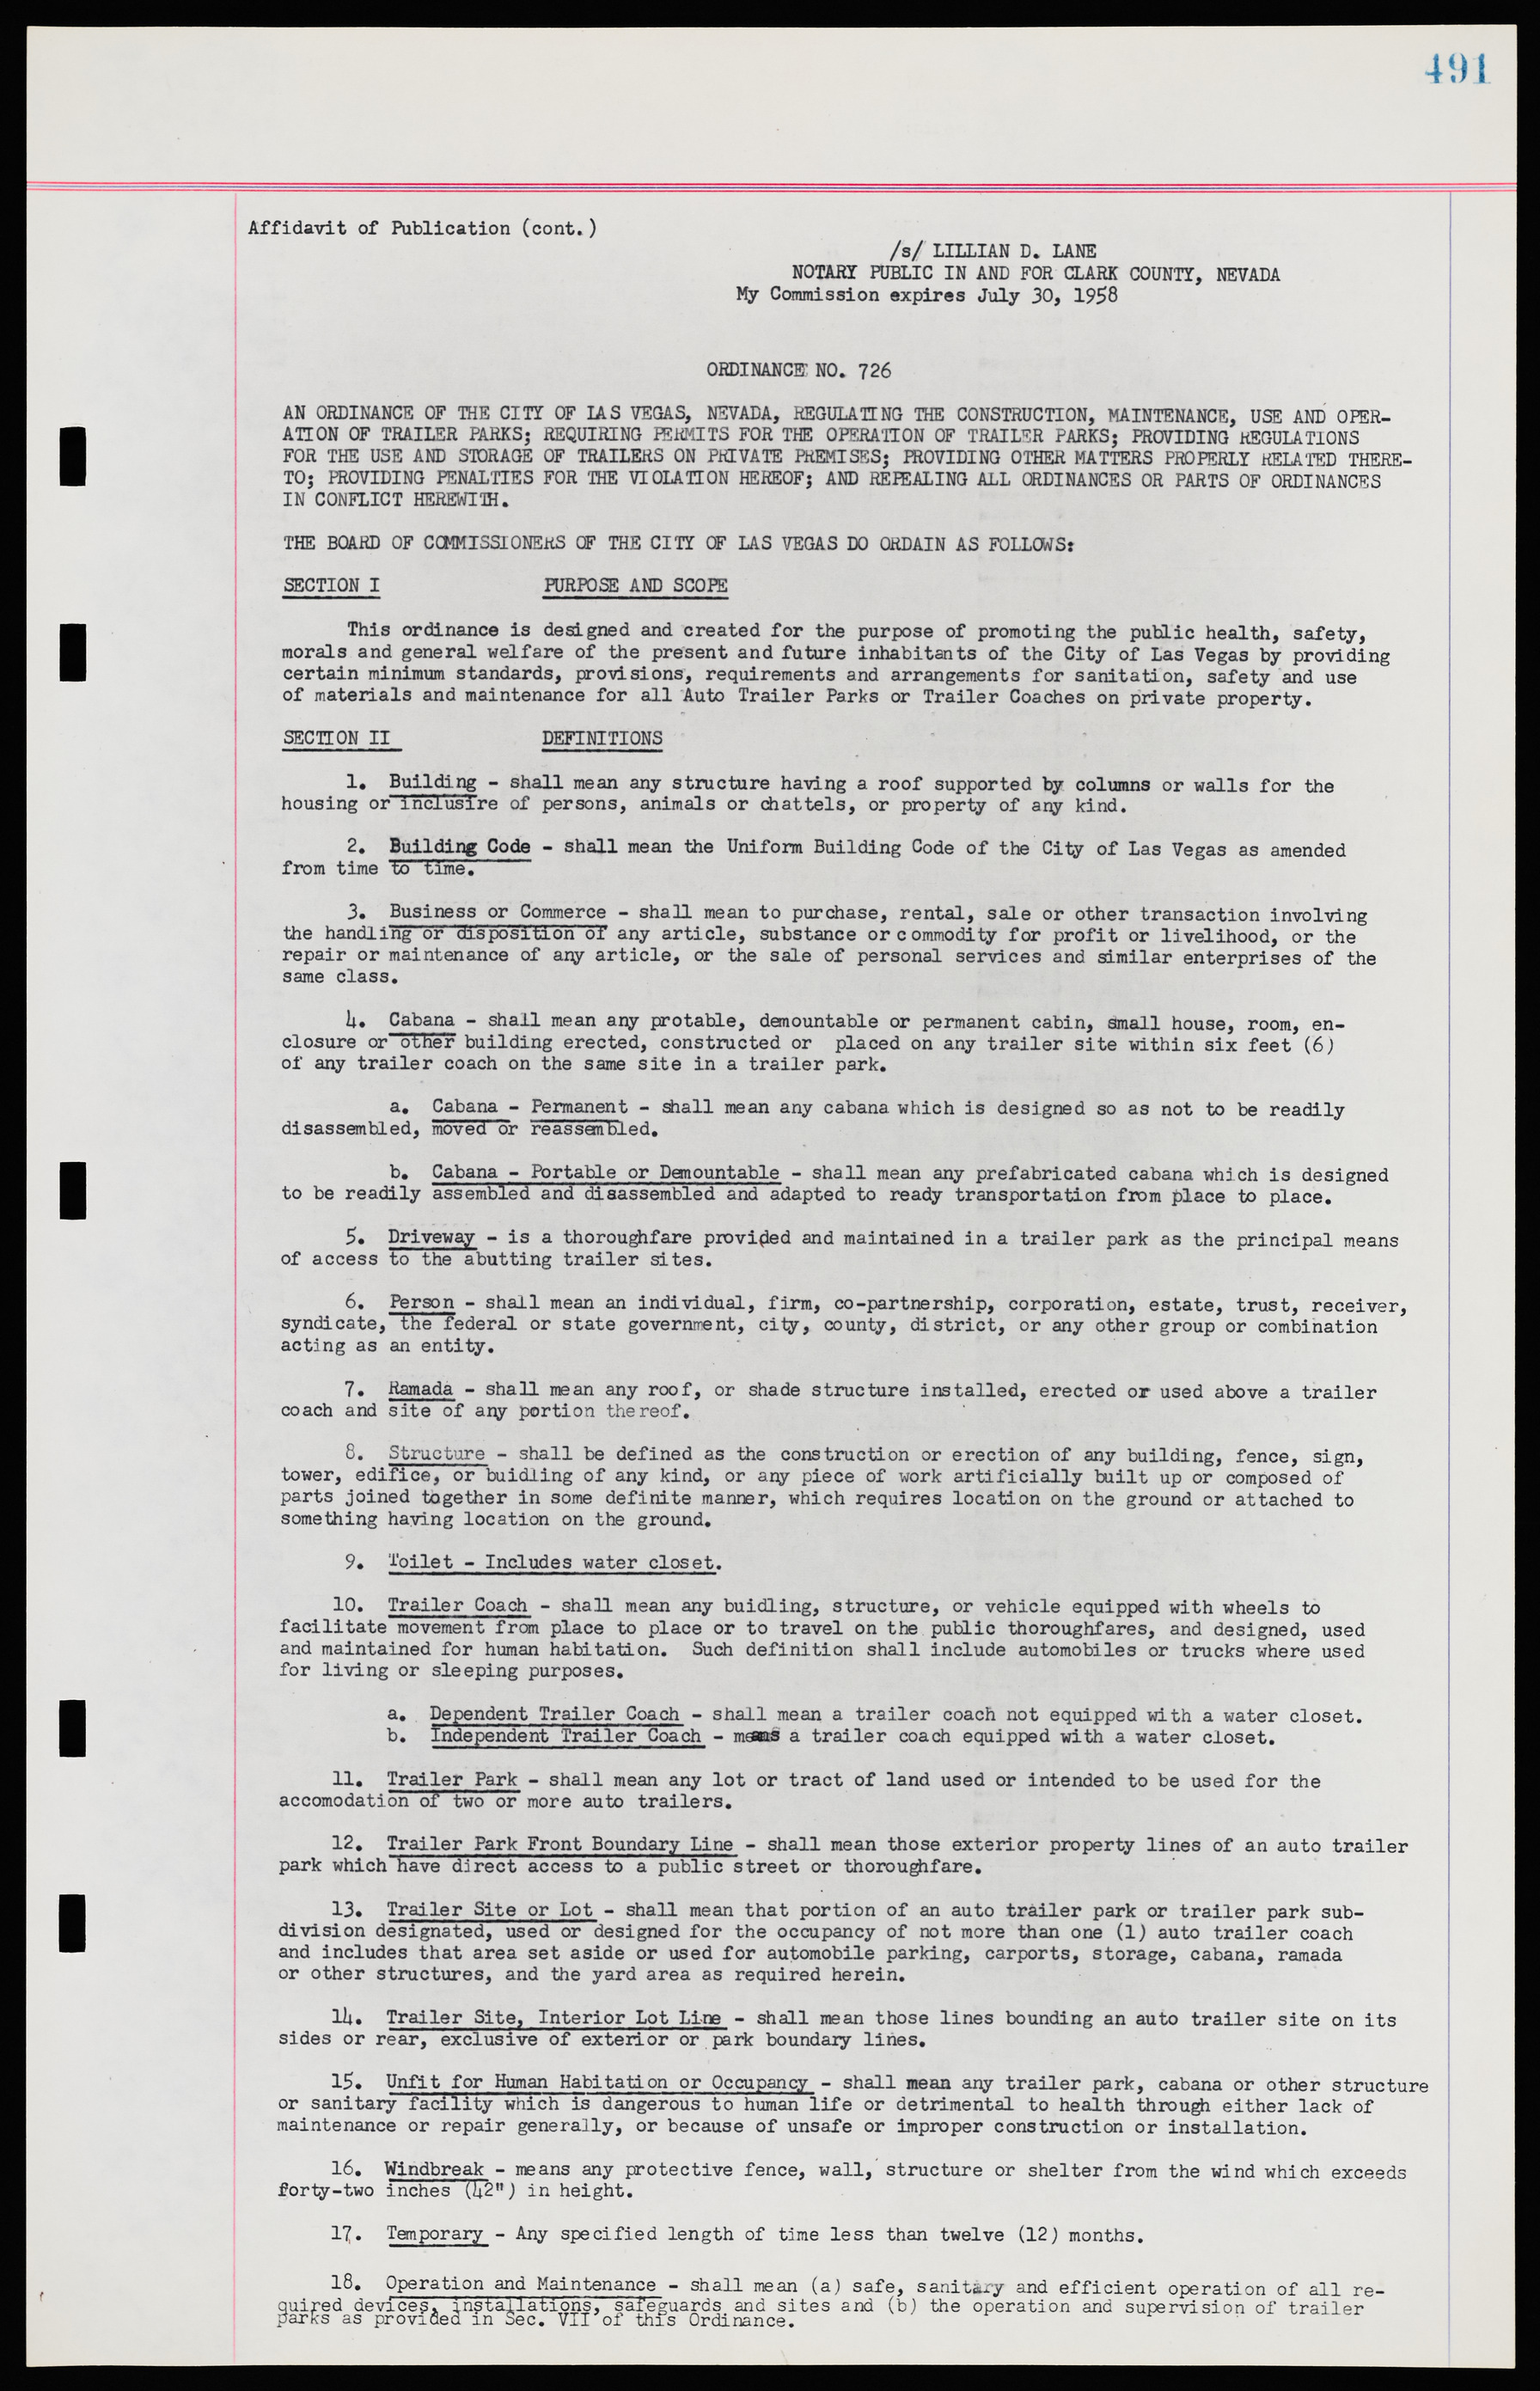 Las Vegas City Ordinances, November 13, 1950 to August 6, 1958, lvc000015-499